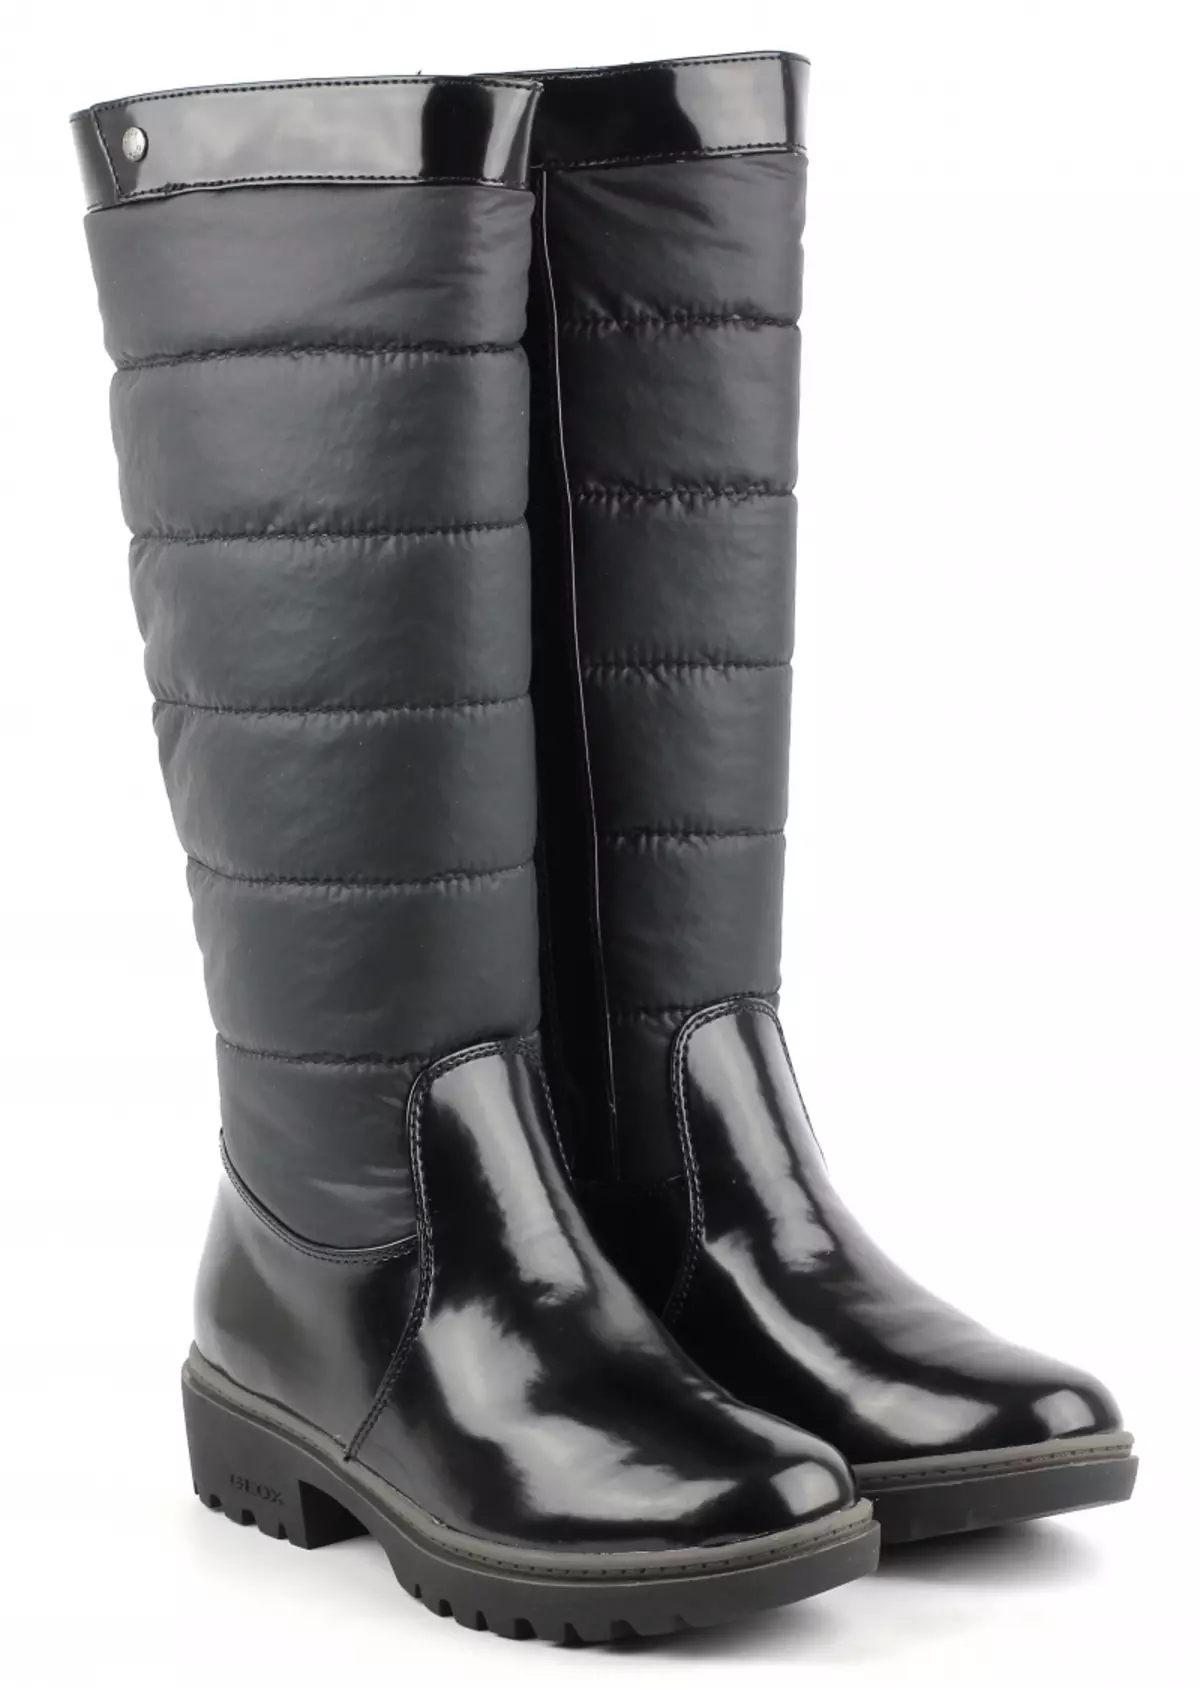 Geox Boots (45 장의 사진) : 소녀를위한 여성의 겨울 모델과 아기 부츠 2108_38